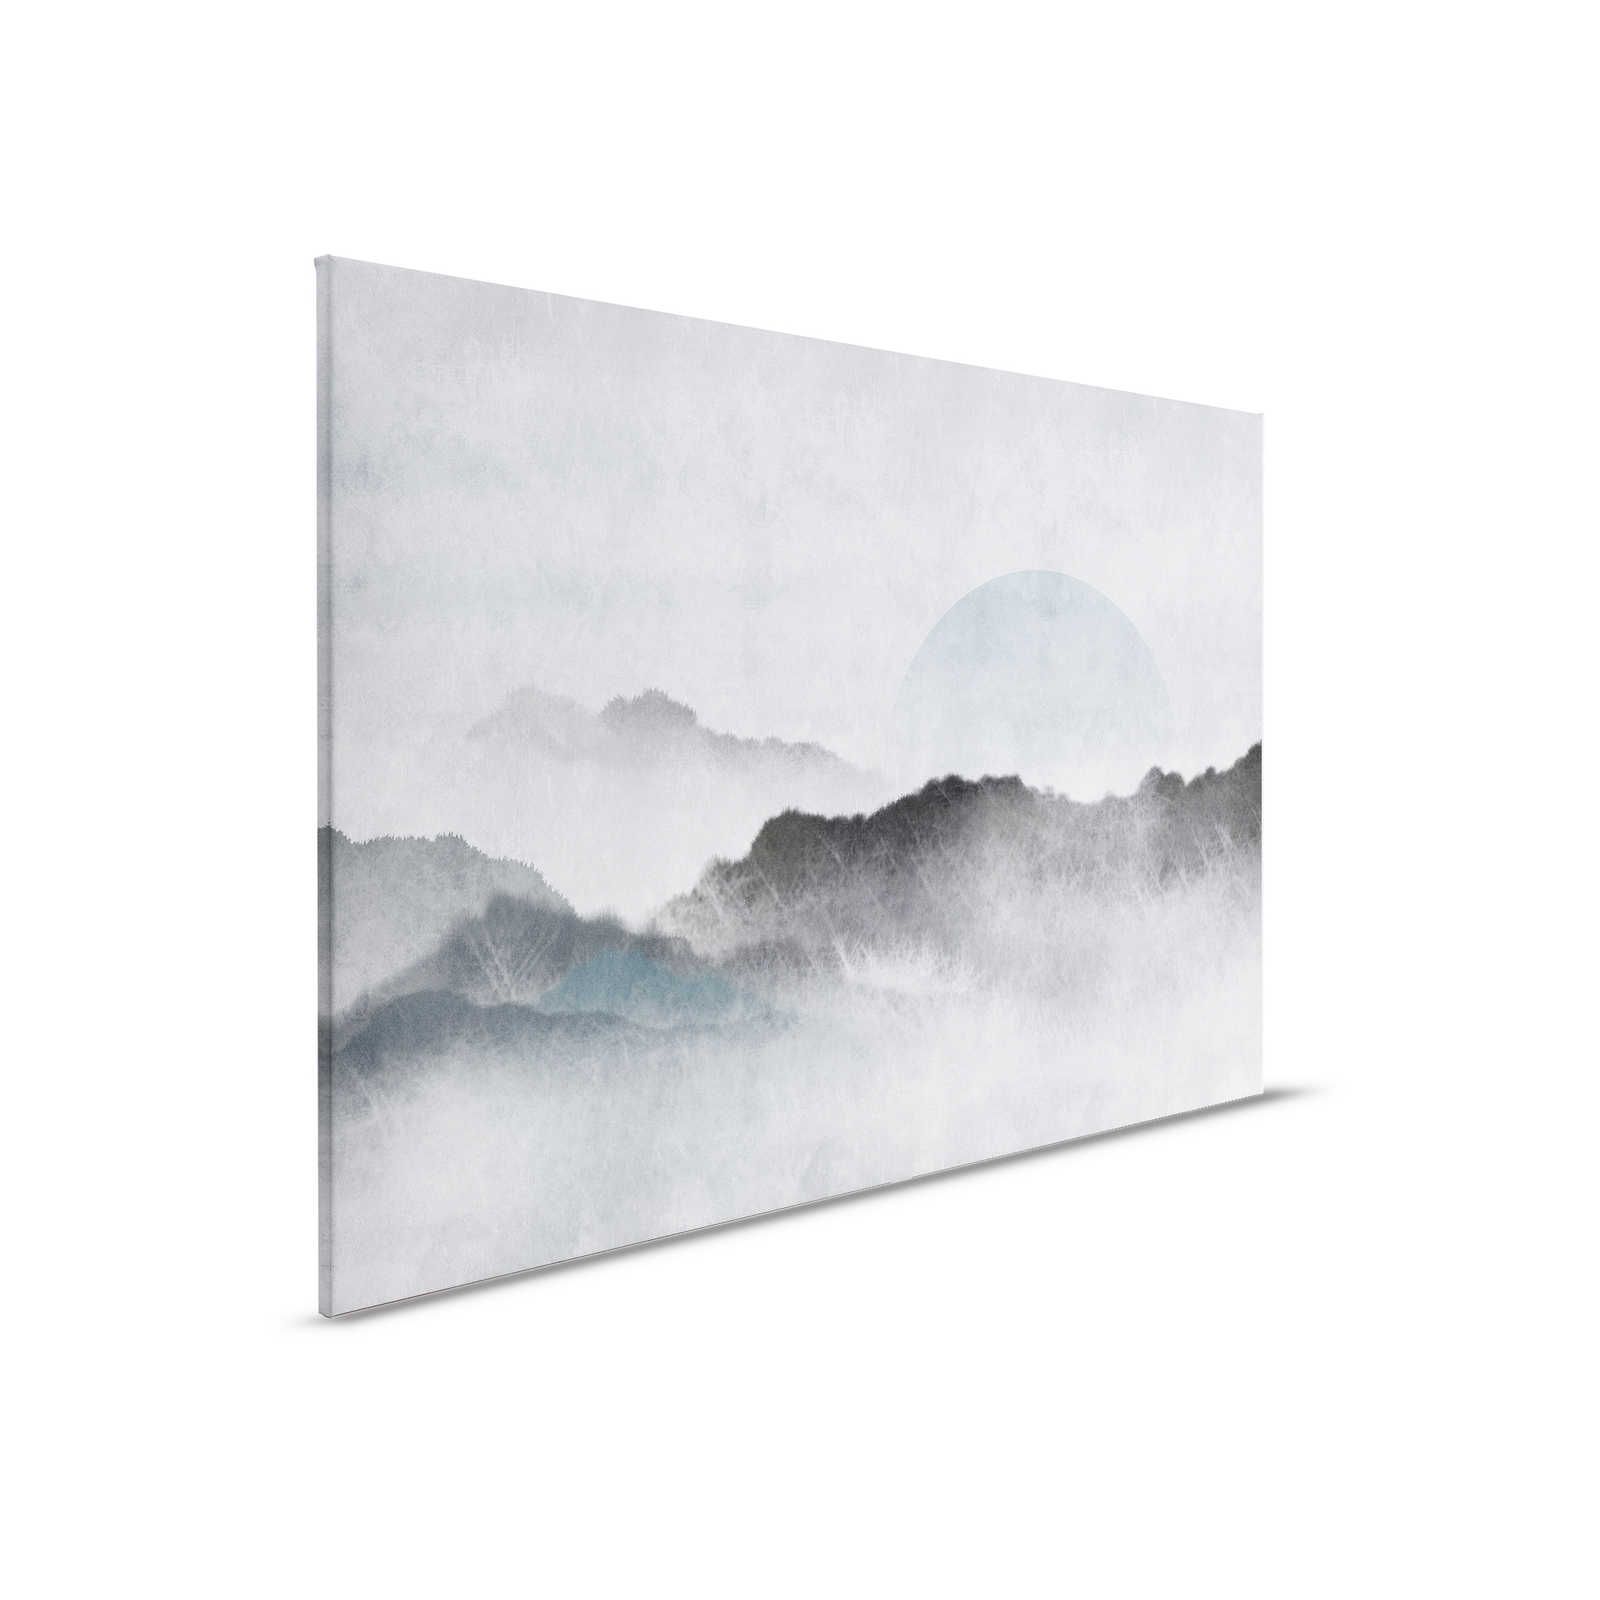         Akaishi 2 - Canvas painting Asian Art Mountain Landscape, Grey & White - 0.90 m x 0.60 m
    